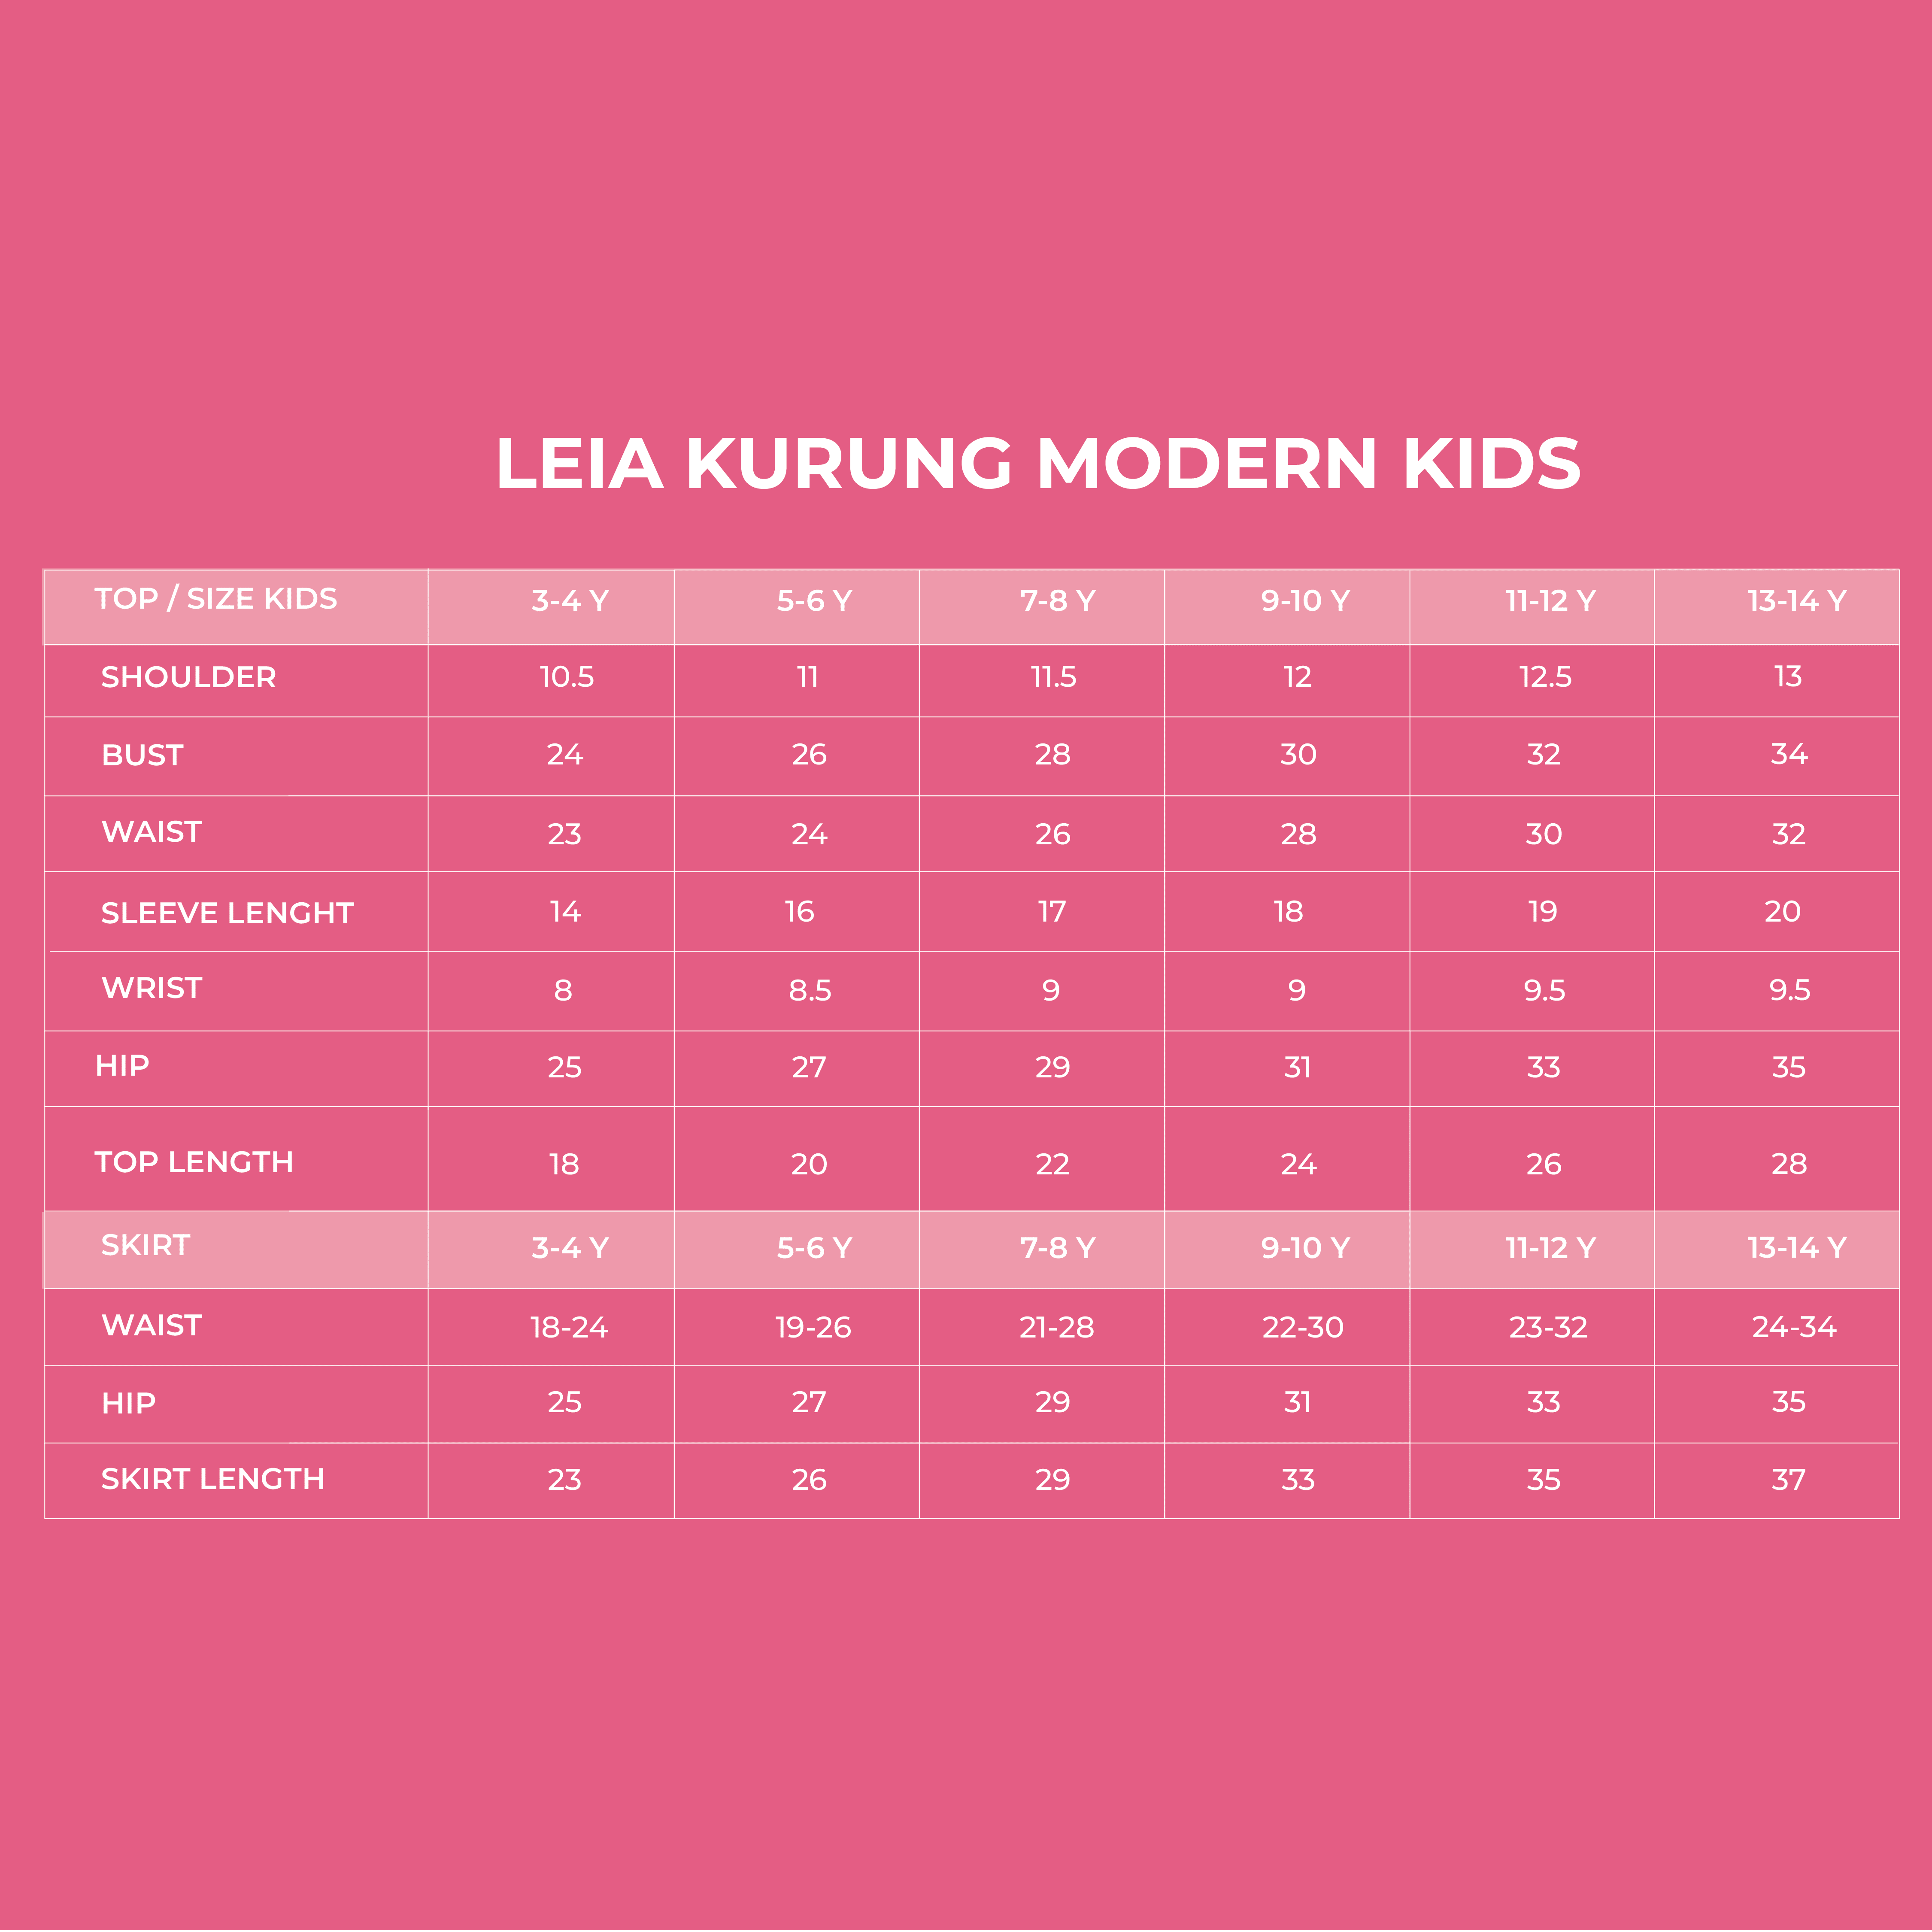 Leia Kurung Riau Modern Kids Measurement